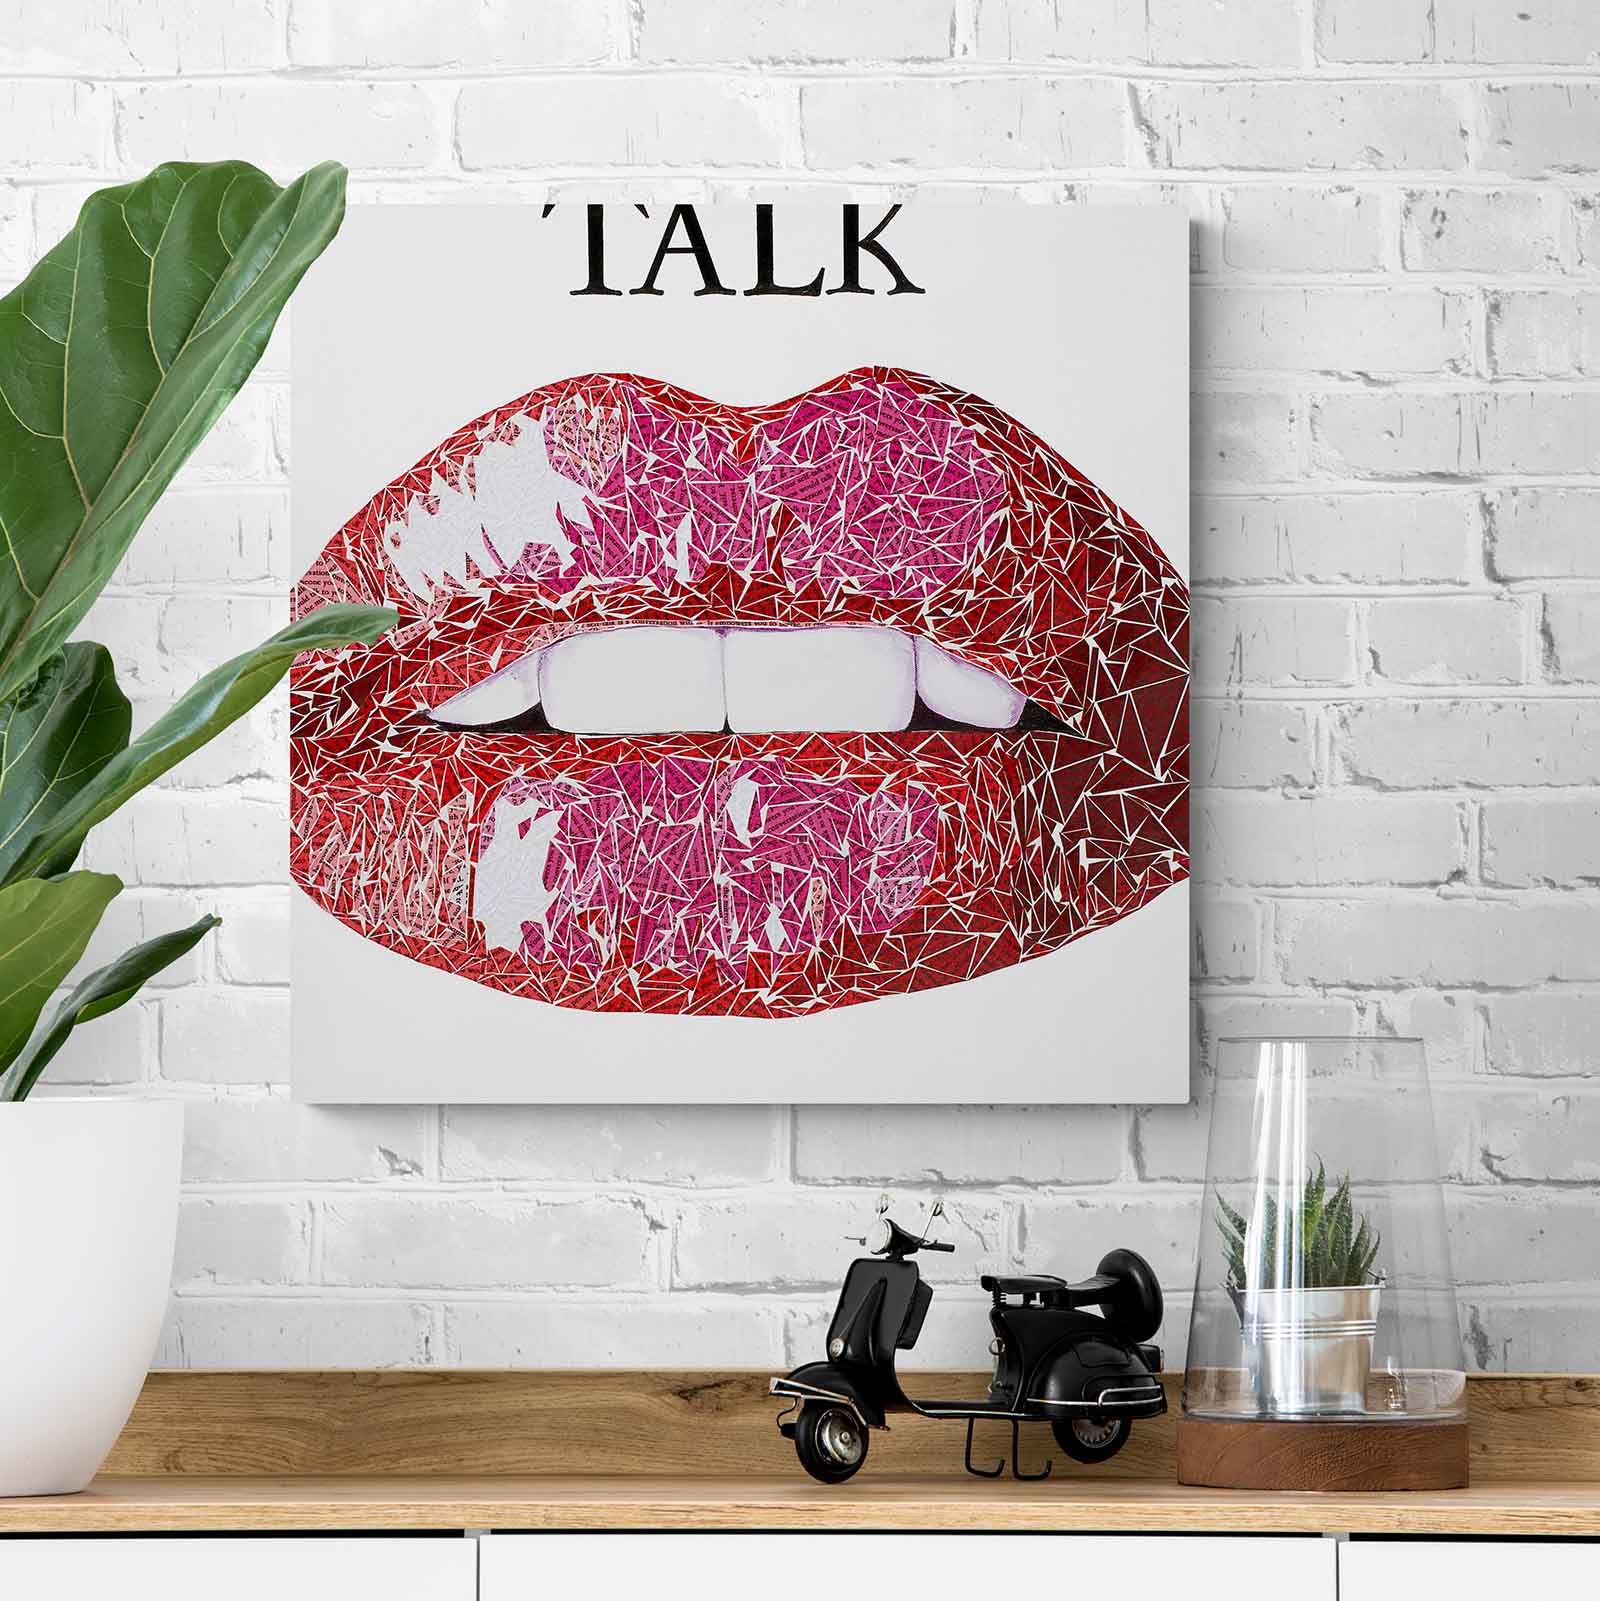 Louis Vuitton Lips Wall Art | Luxury Art Canvas